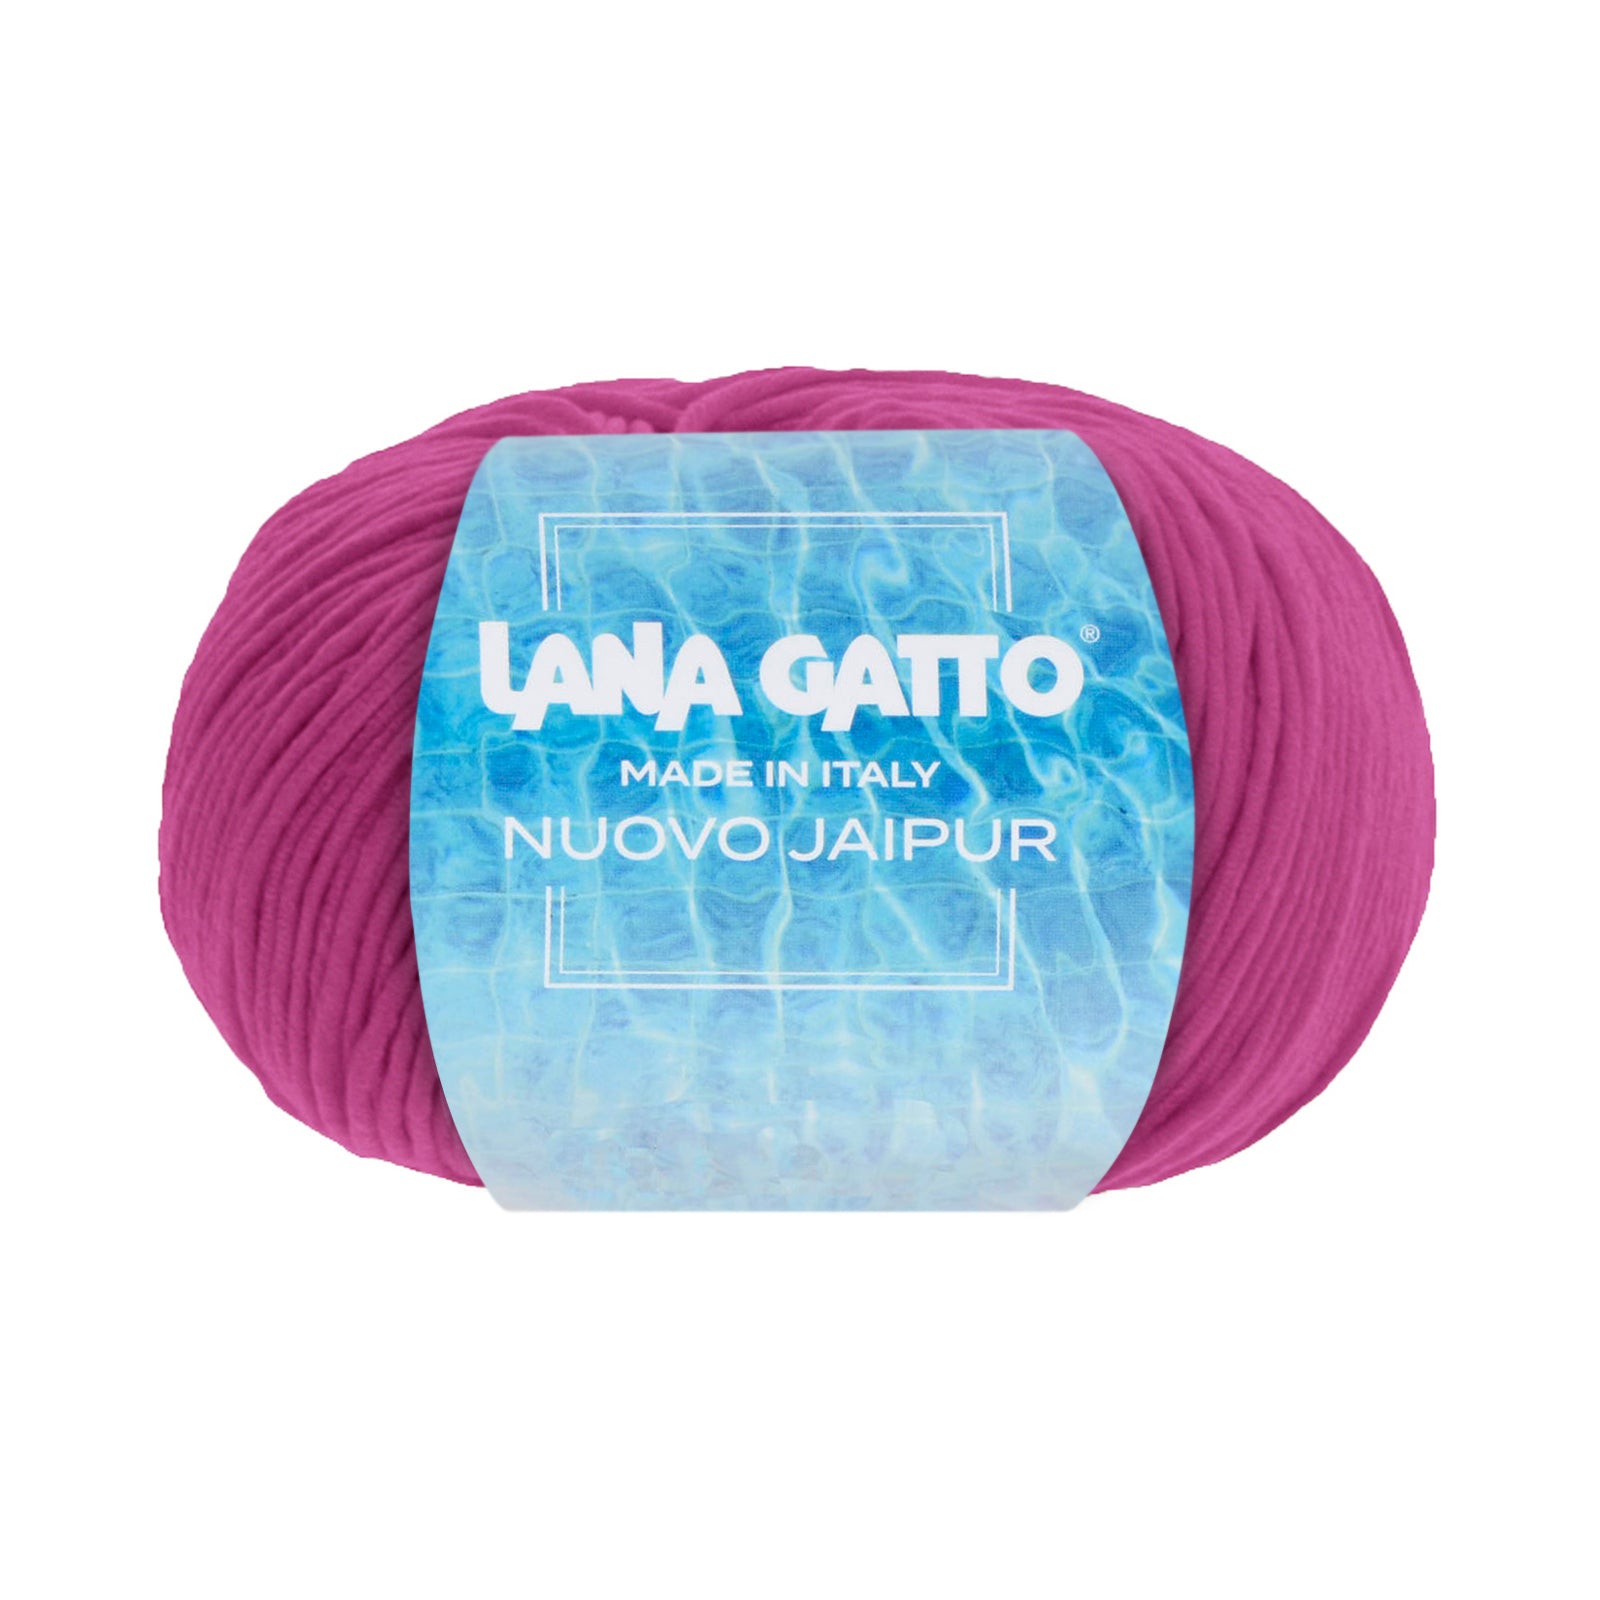 100% Makò Cotton, Lana Gatto Nuovo Jaipur Line - Pink and Purple Colors